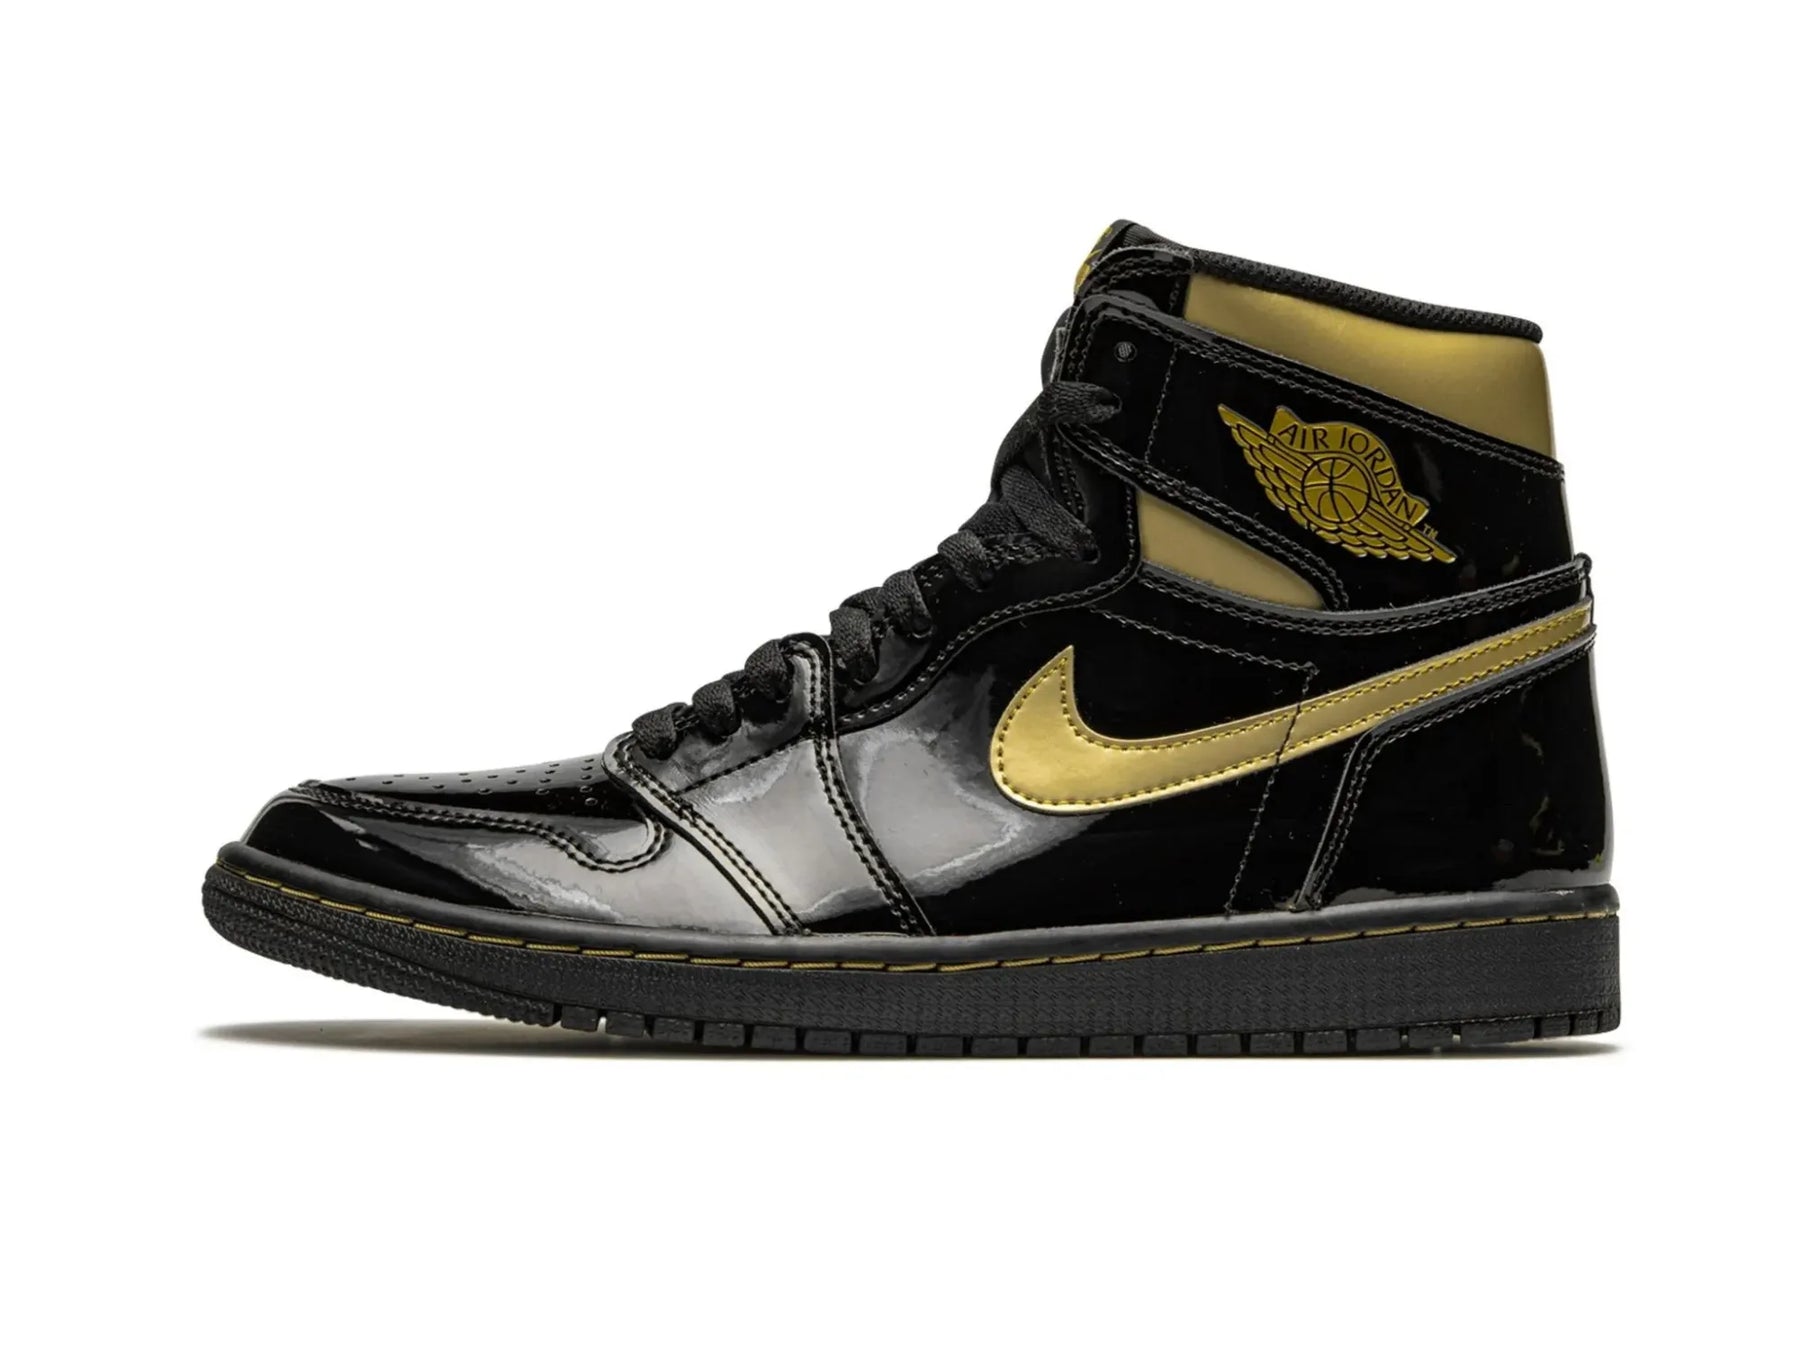 Nike Air Jordan 1 Retro High "Black Metallic Gold" - street-bill.dk